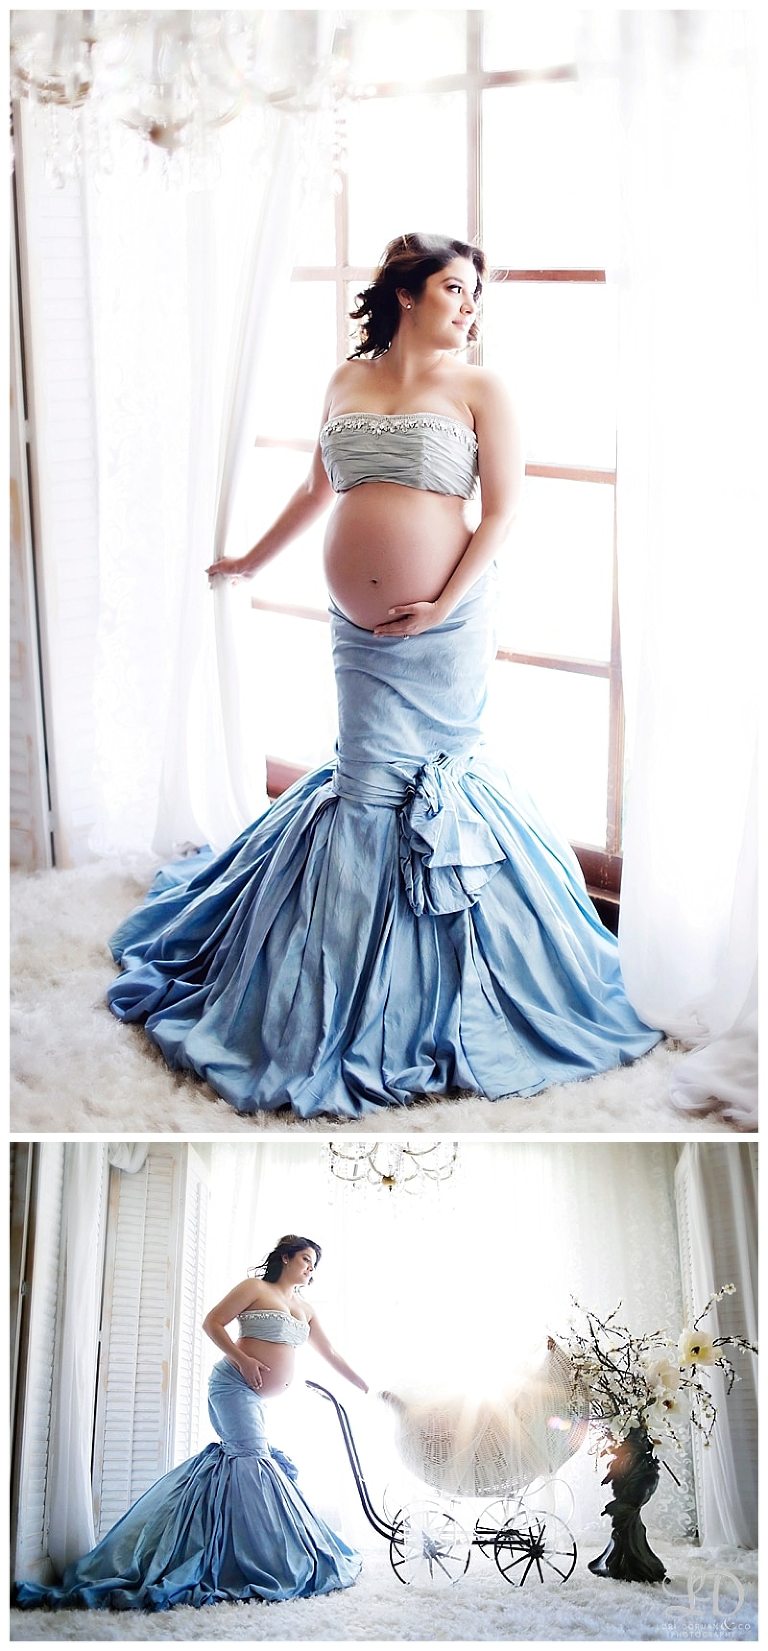 sweet maternity photoshoot-lori dorman photography-maternity boudoir-professional photographer_4137.jpg